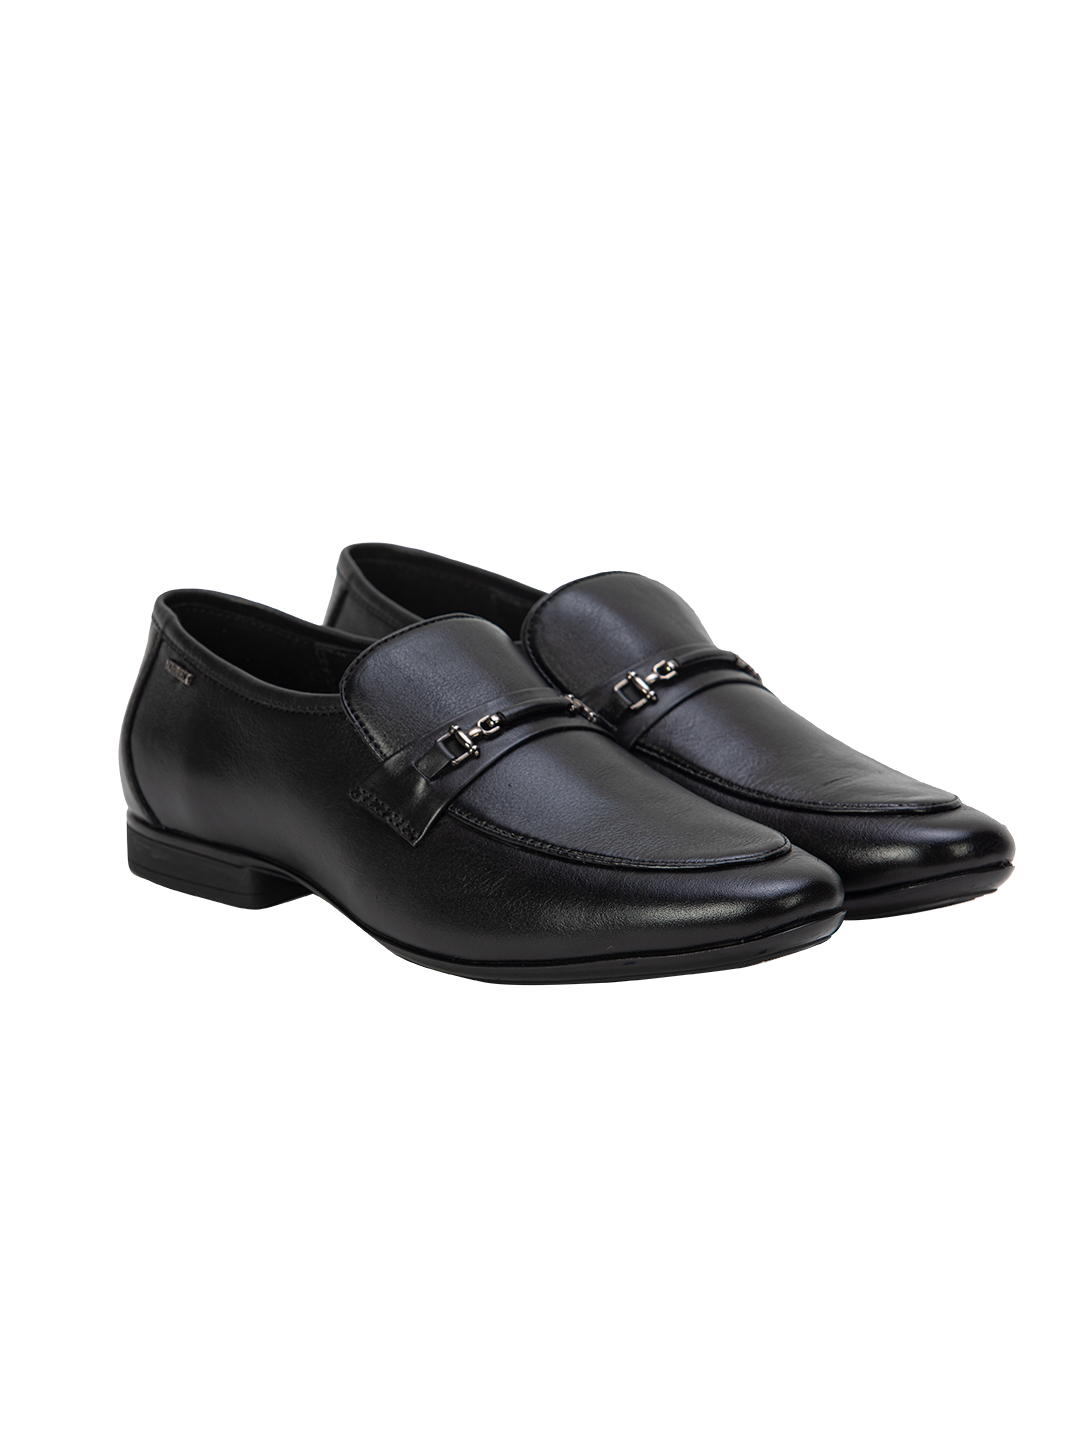 Buy Von Wellx Germany Comfort Black Glib Shoes Online in Agra